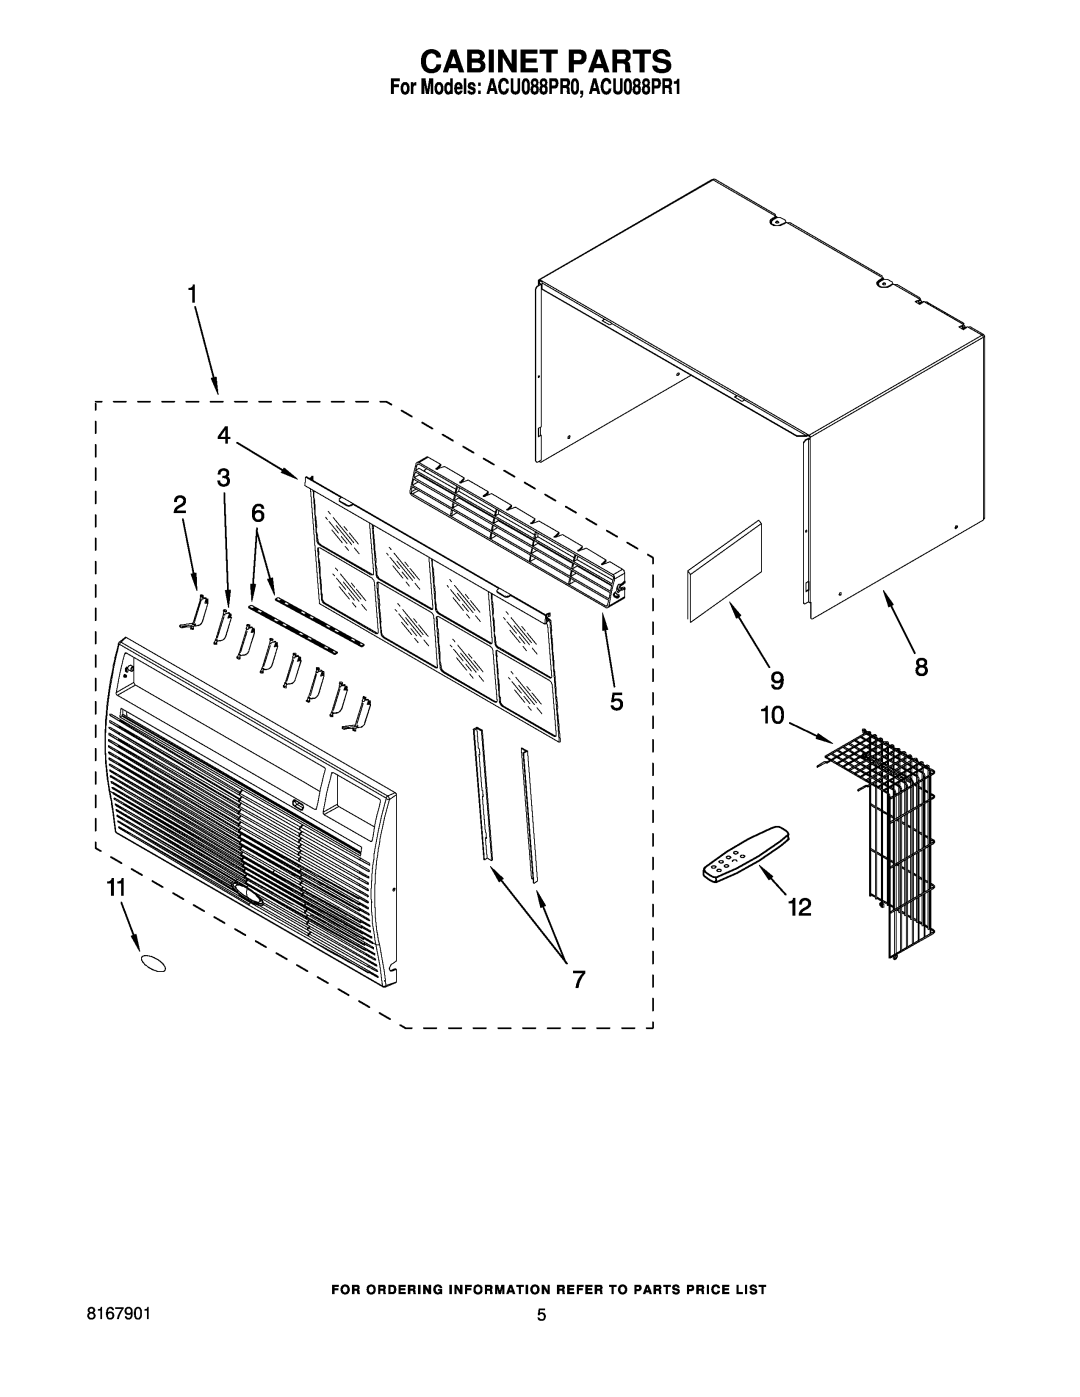 Whirlpool manual Cabinet Parts, For Models ACU088PR0, ACU088PR1 